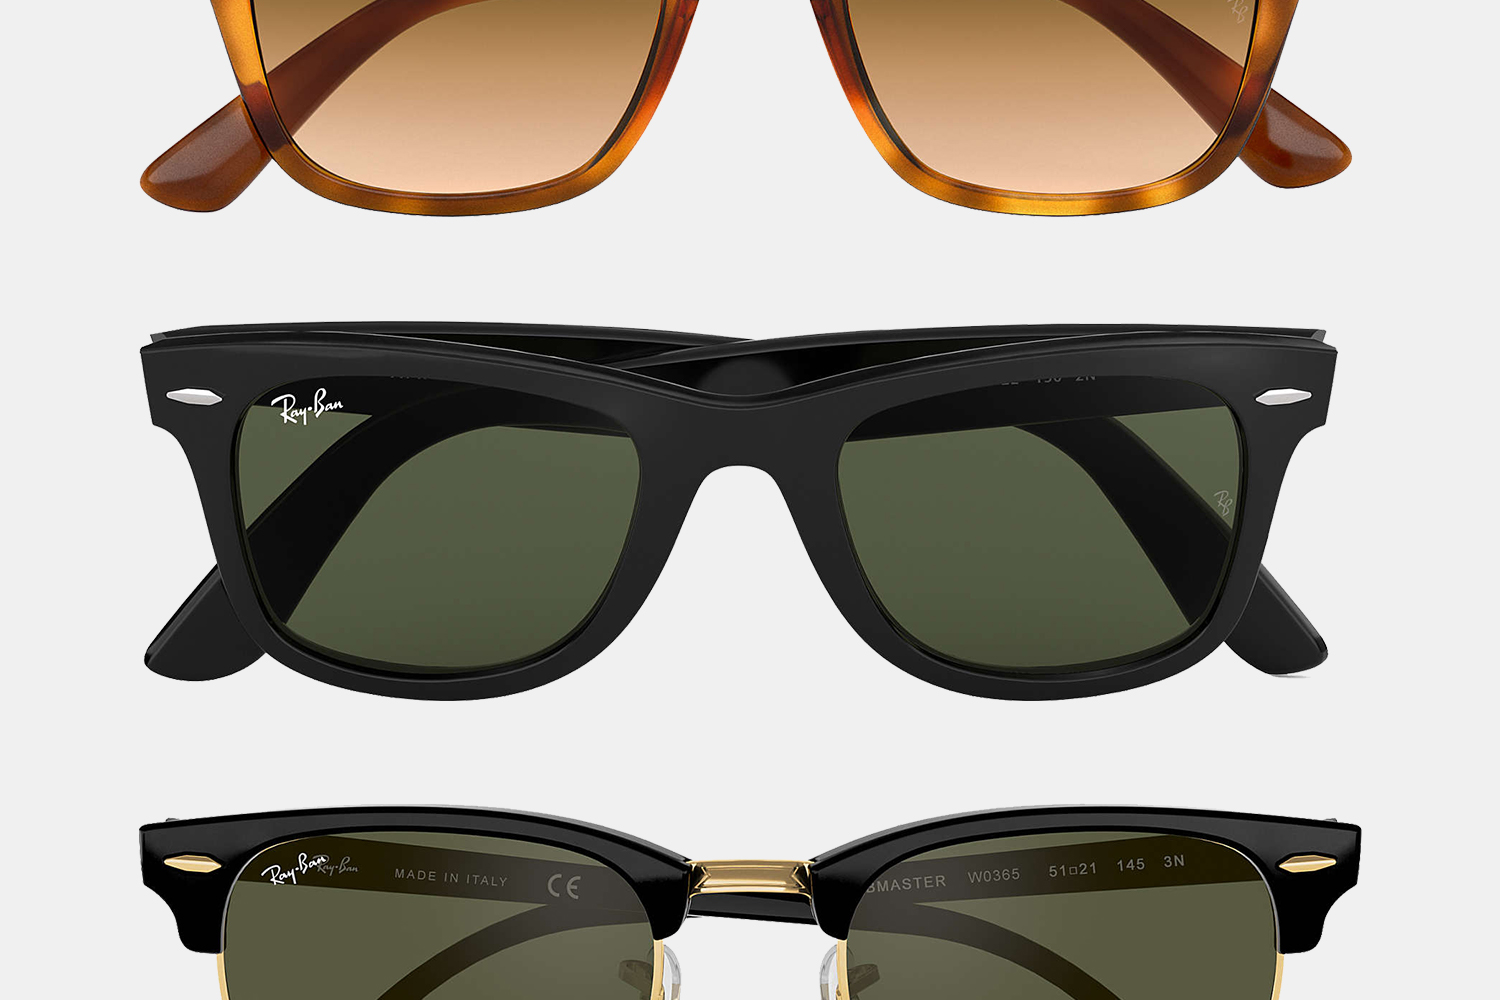 Essential Men's Sunglasses Are on Sale 